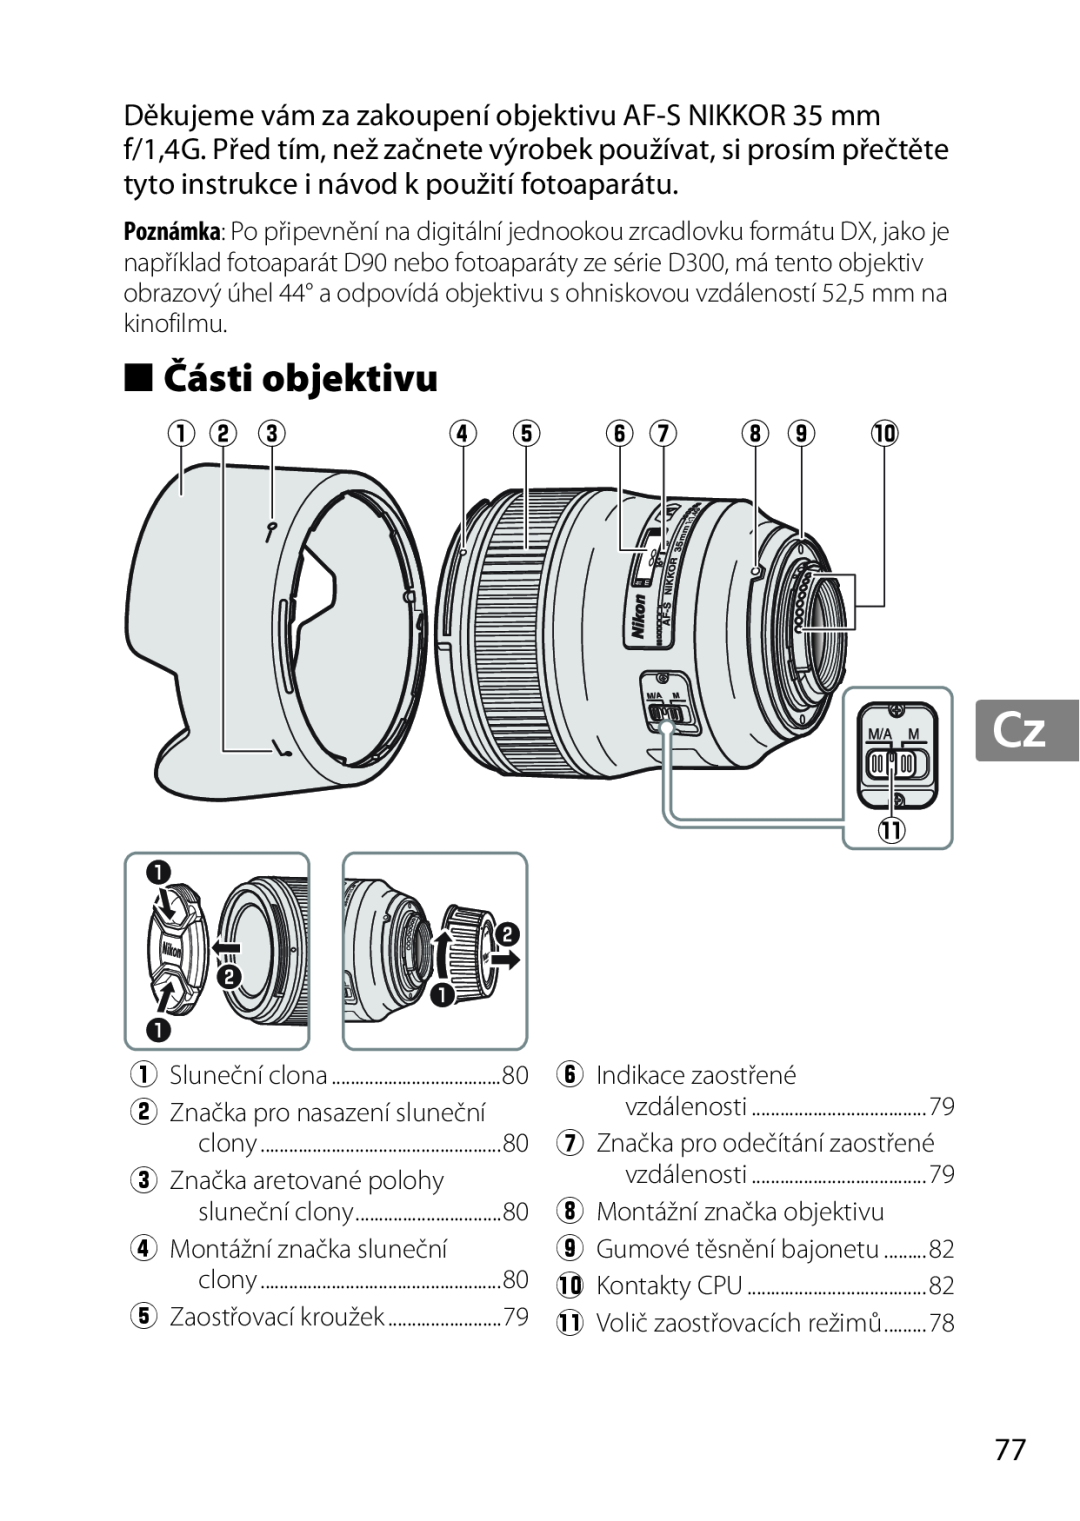 Nikon 35mmf14G, AF-S, 35mm f/1.4G, 2198 user manual Části objektivu, q w e, r t y u i o !0 